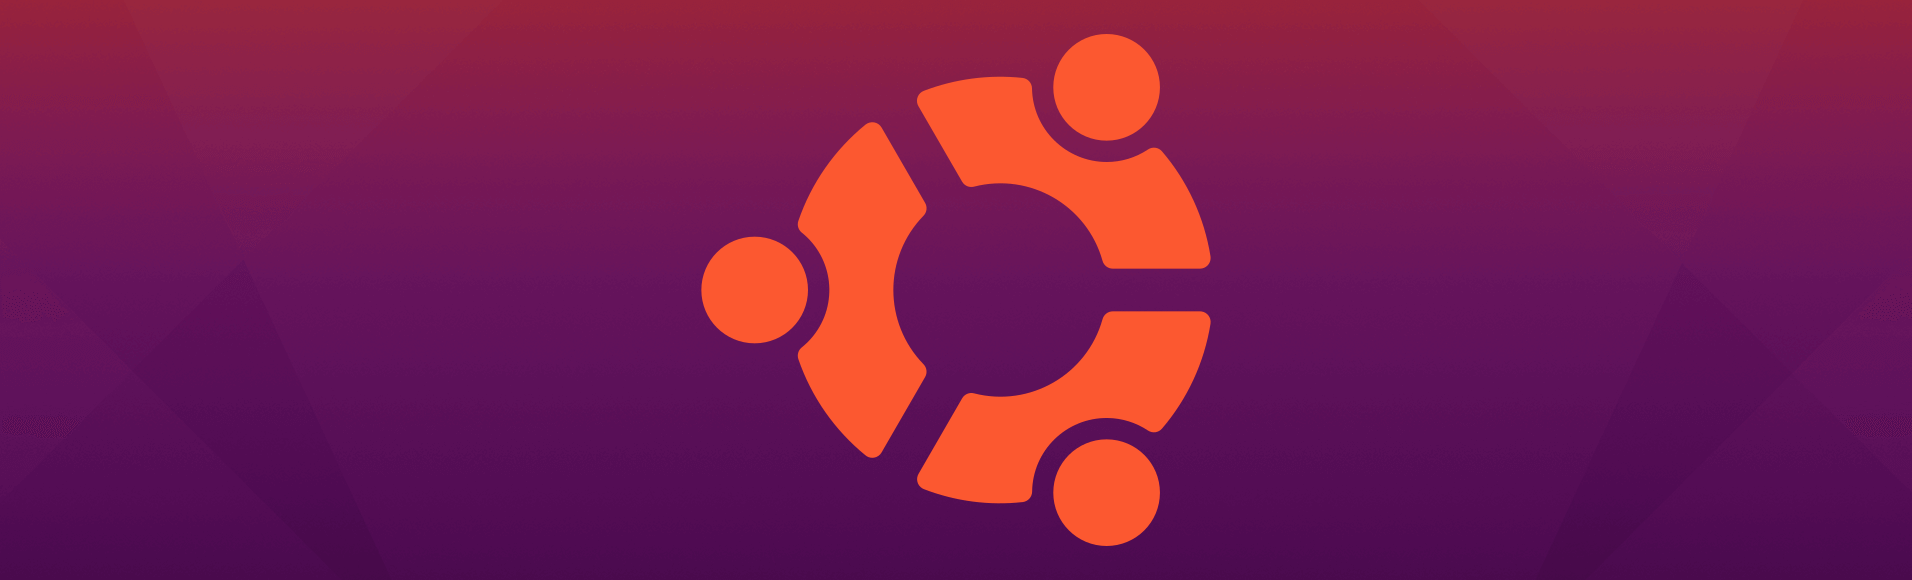 Cómo instalar vfxAlert en Ubuntu